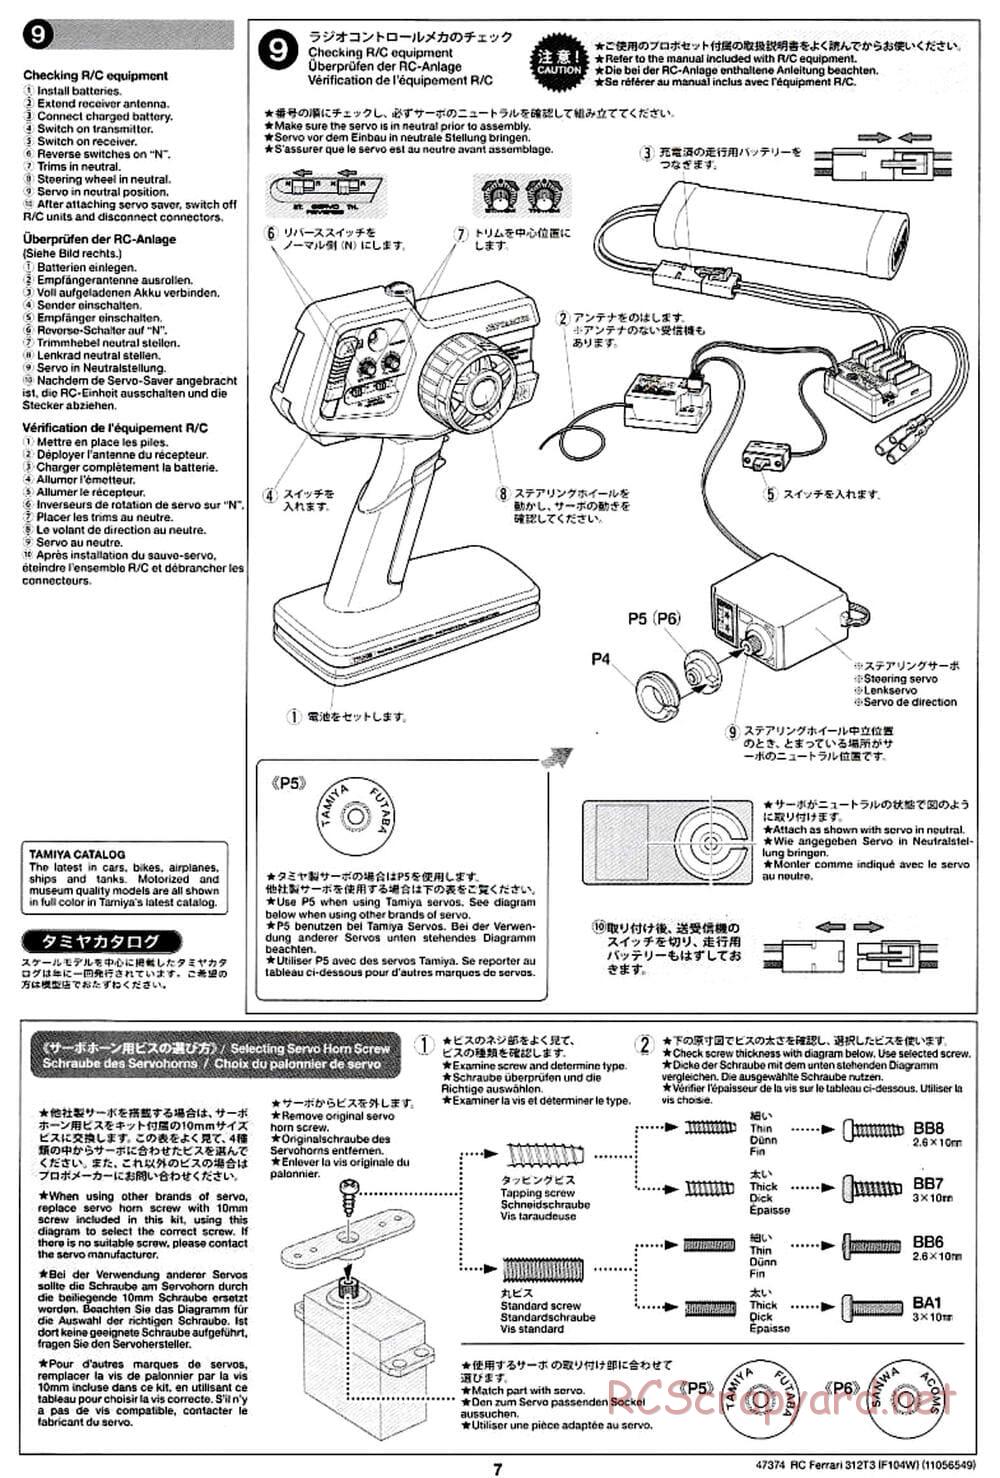 Tamiya - Ferrari 312T3 - F104W Chassis - Manual - Page 7